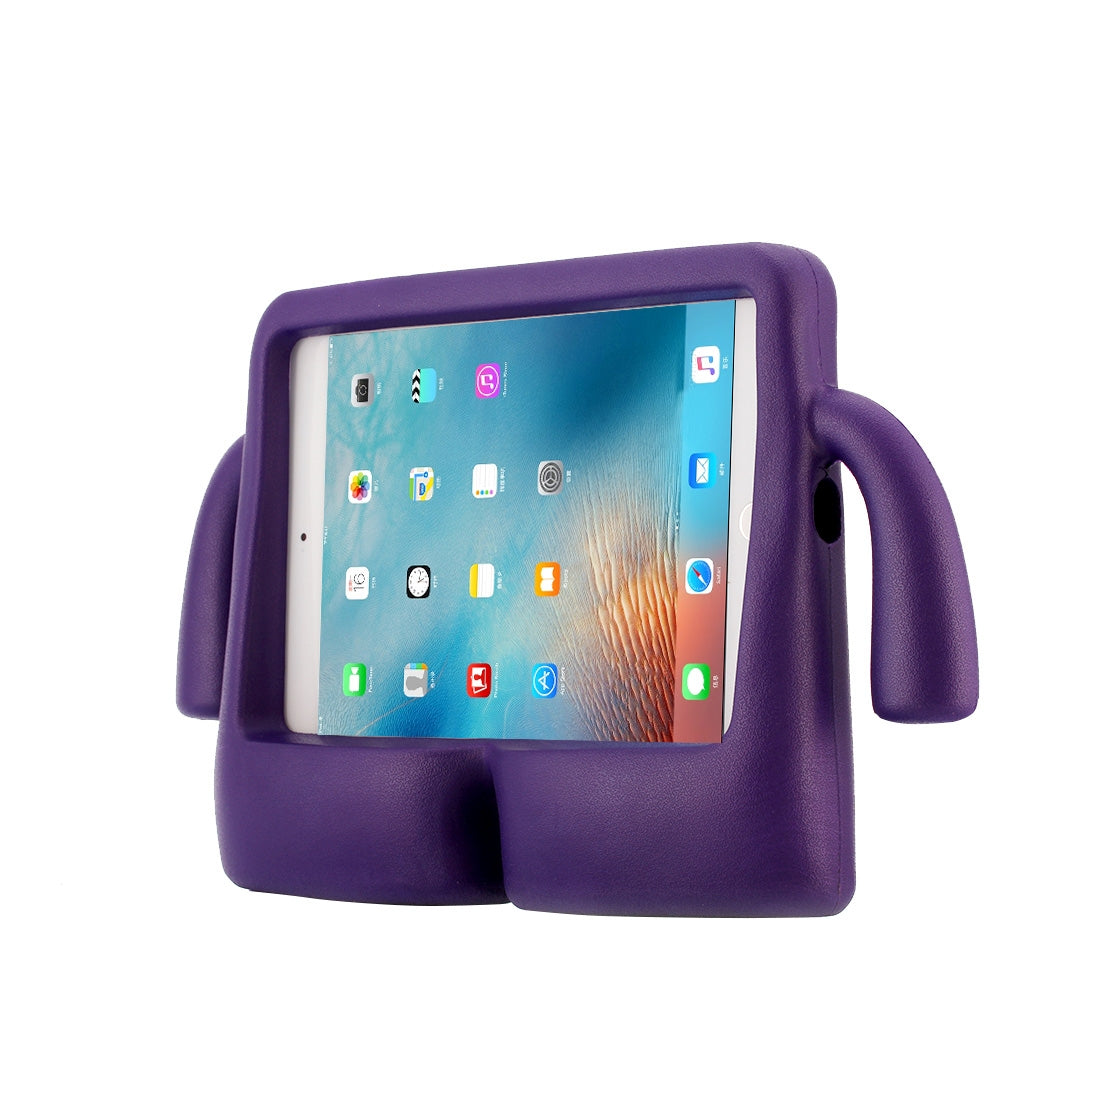 Universal EVA Little Hands TV Model Shockproof Protective Cover Case for iPad mini 4 / mini 3 / mini 2 / mini(Purple)